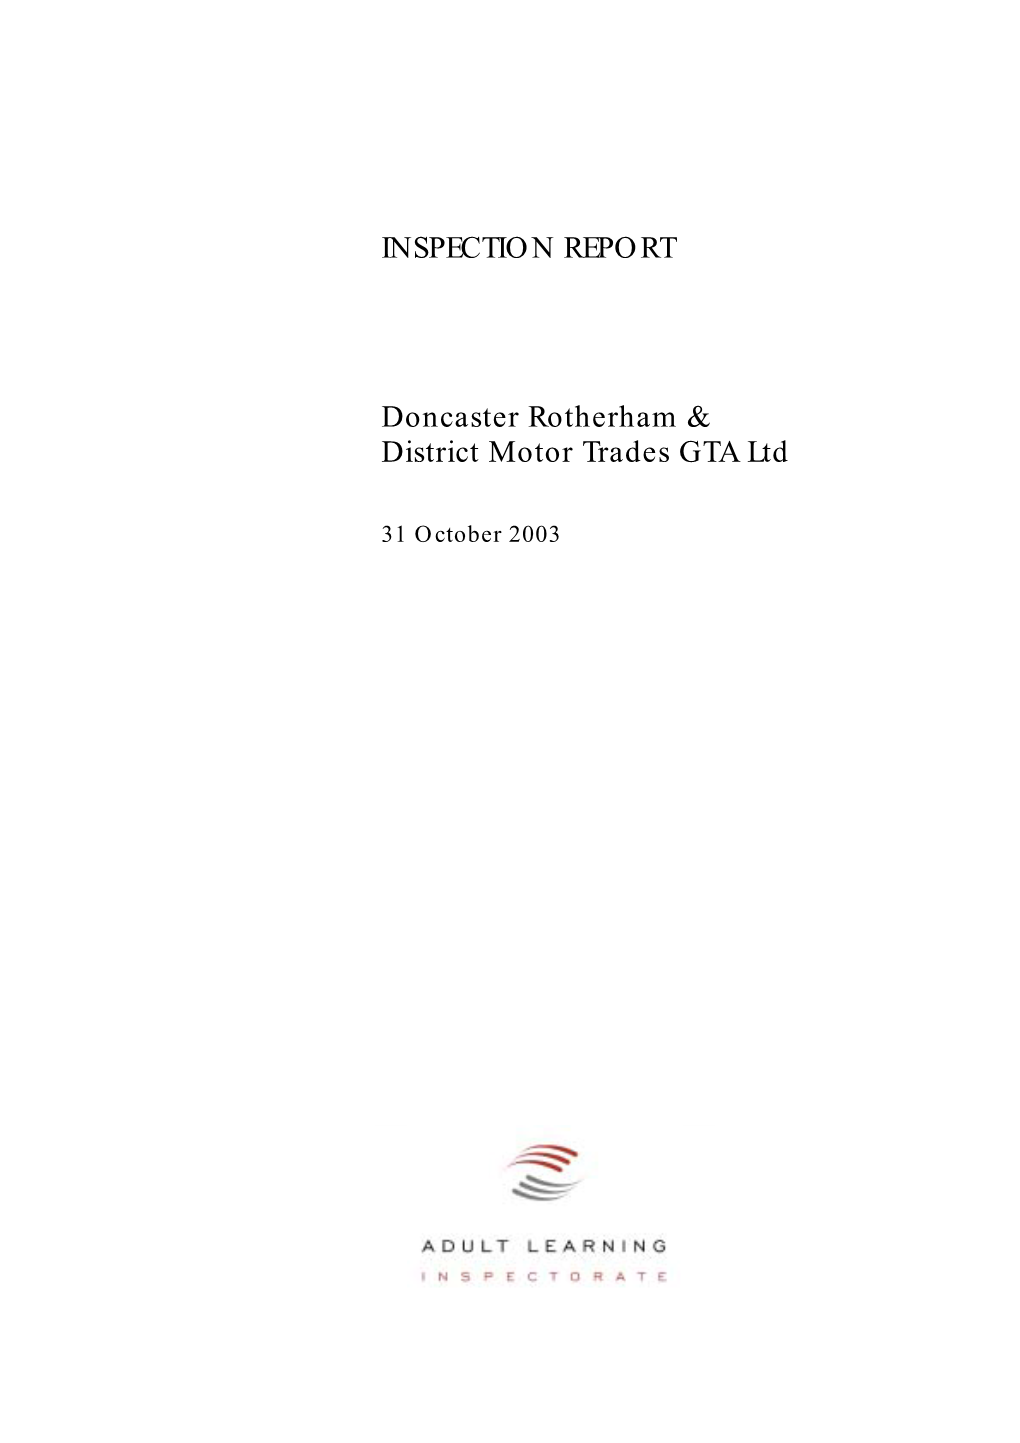 Doncaster Rotherham & District Motor Trades GTA Ltd INSPECTION